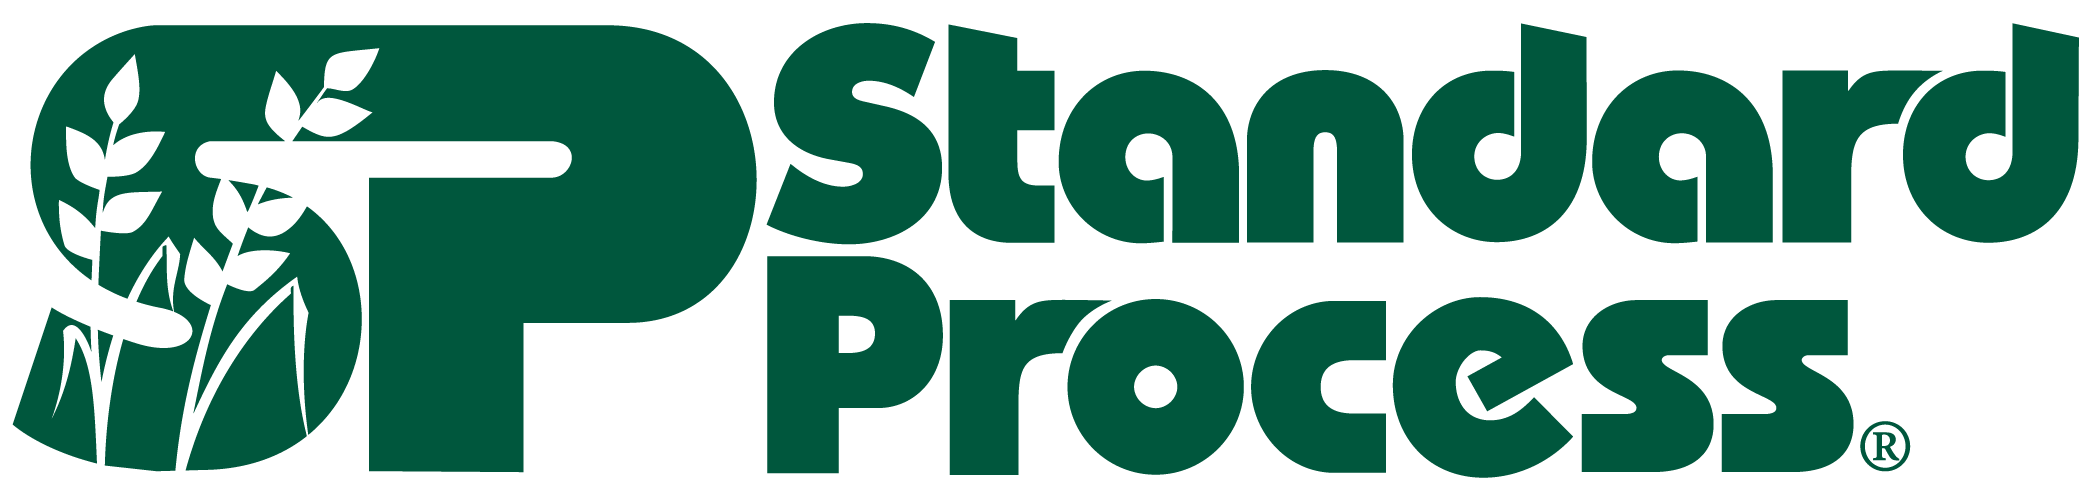 Standard Process Inc. Company Logo